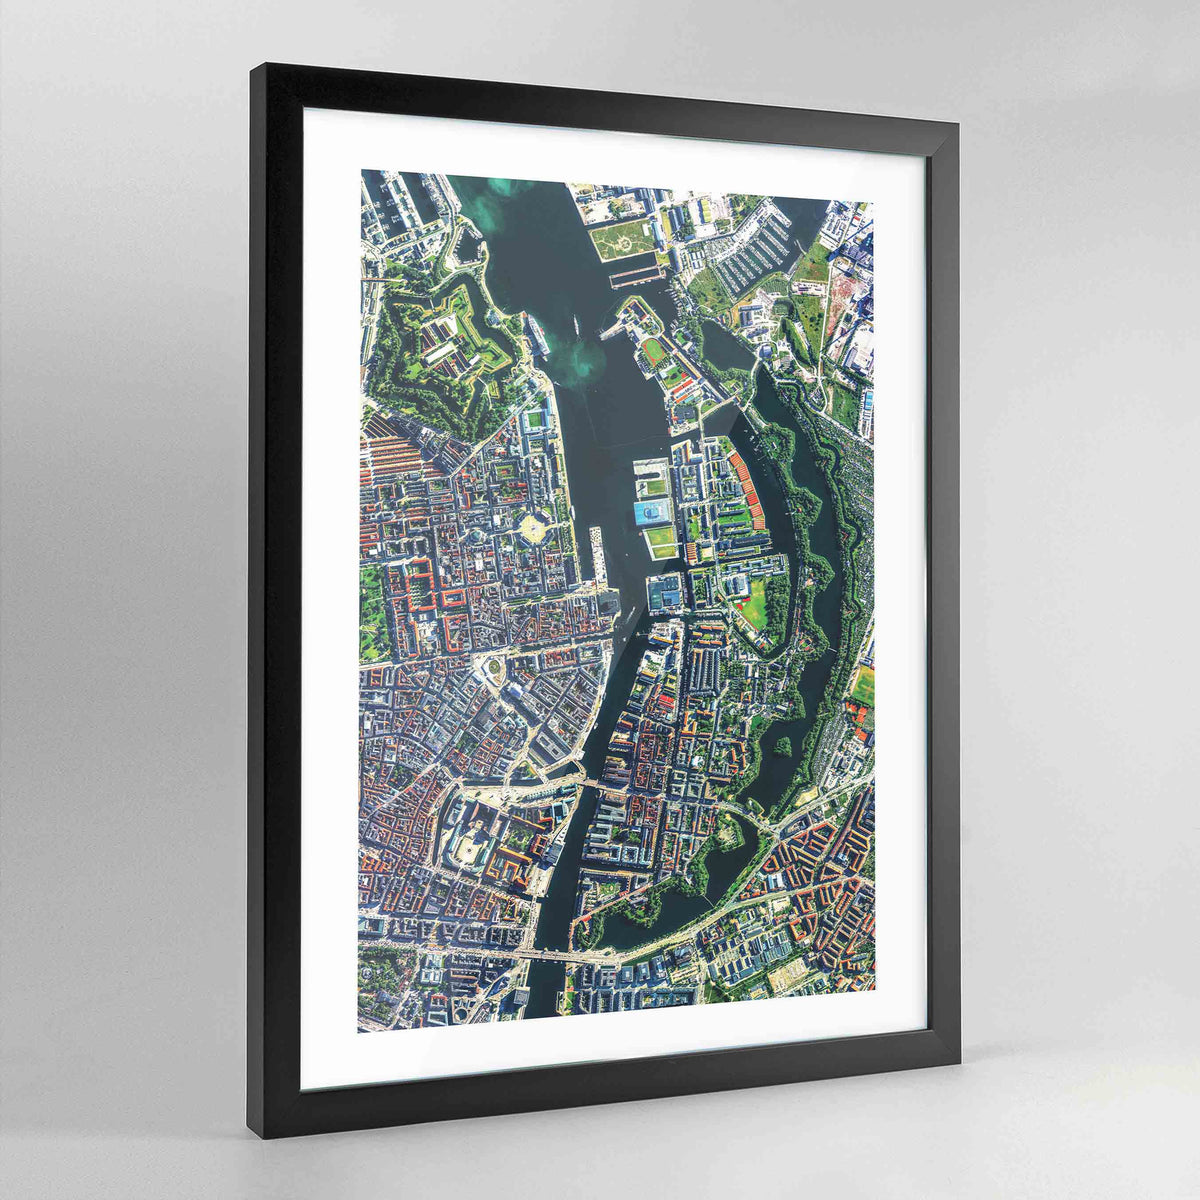 Copenhagen Earth Photography Art Print - Framed